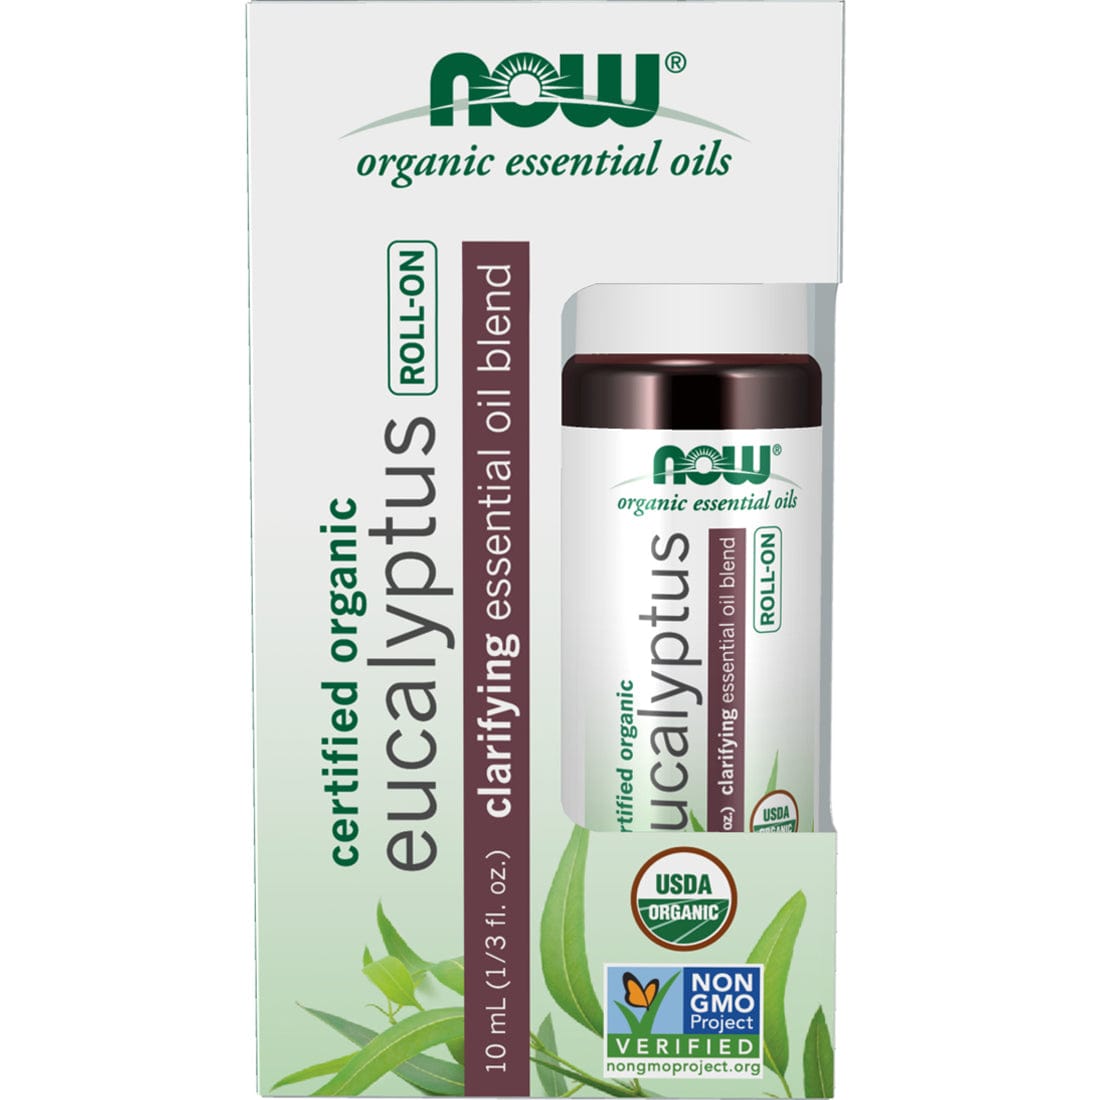 NOW Organic Eucalyptus Essential Oil Roll-On, 10ml